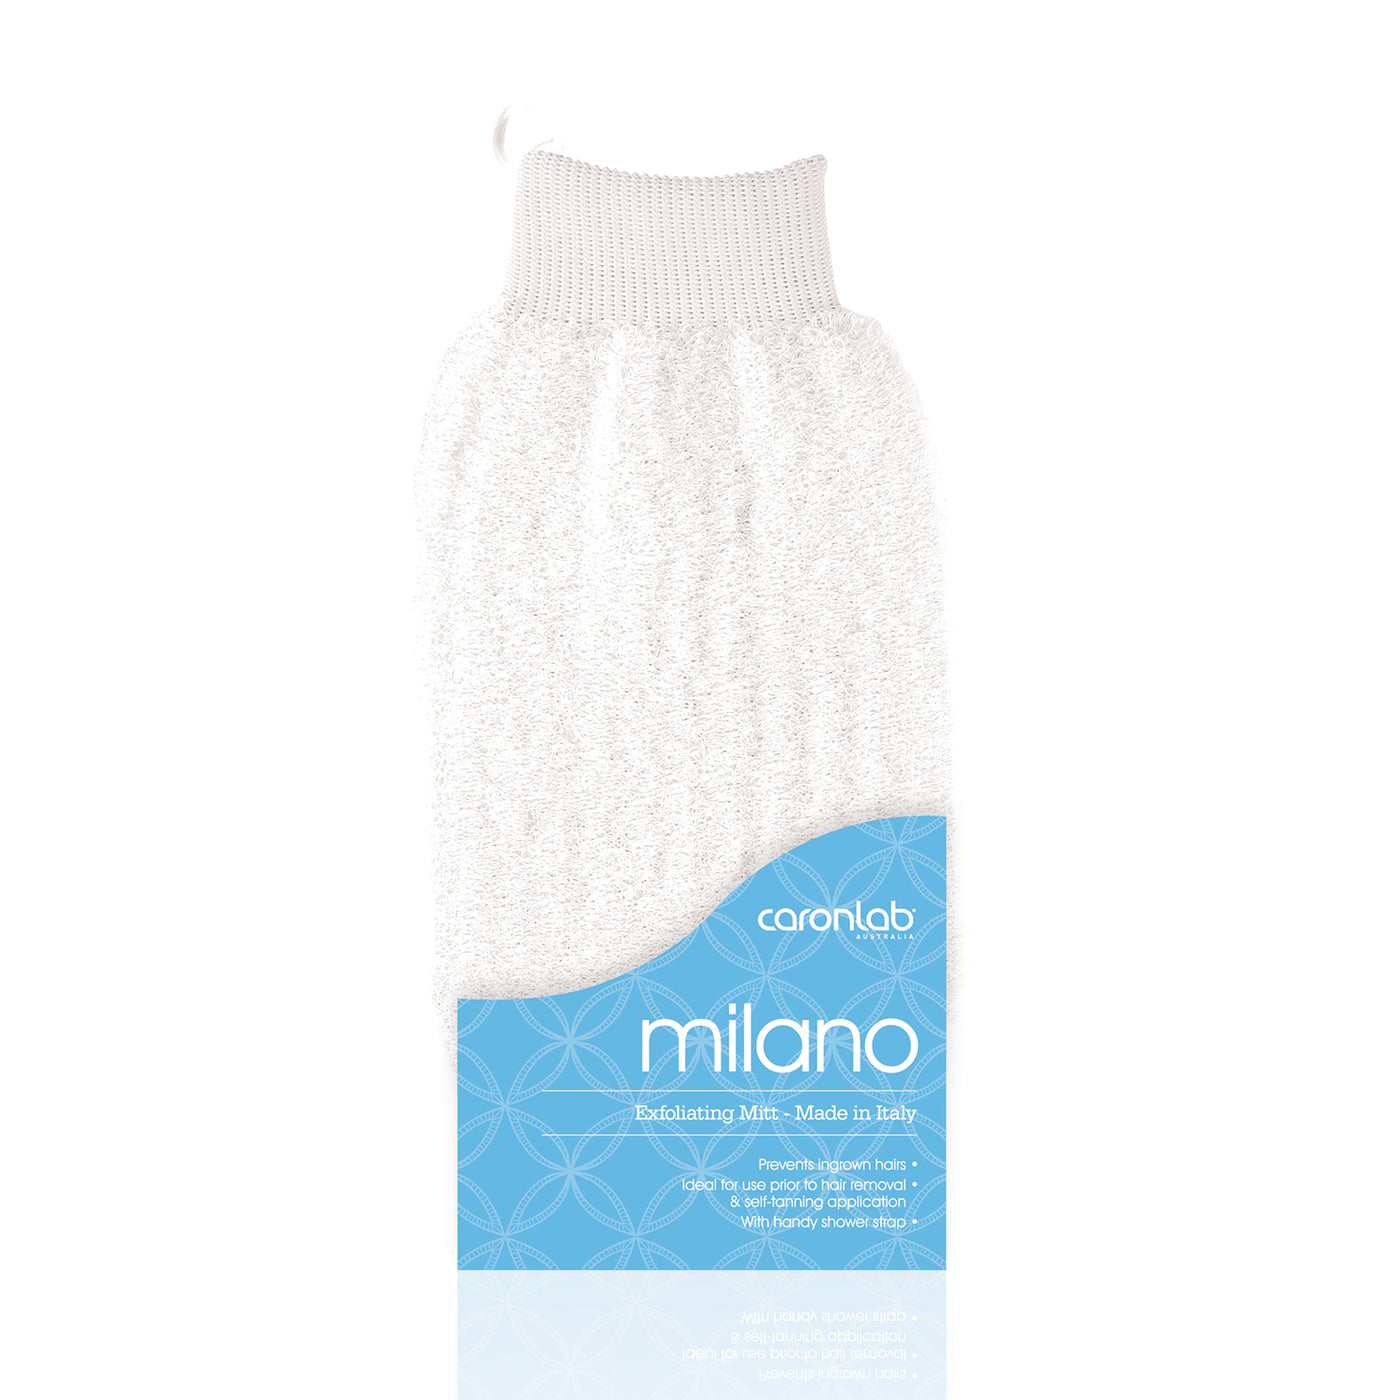 Caronlab Milano Exfoliating Massage Mitt white